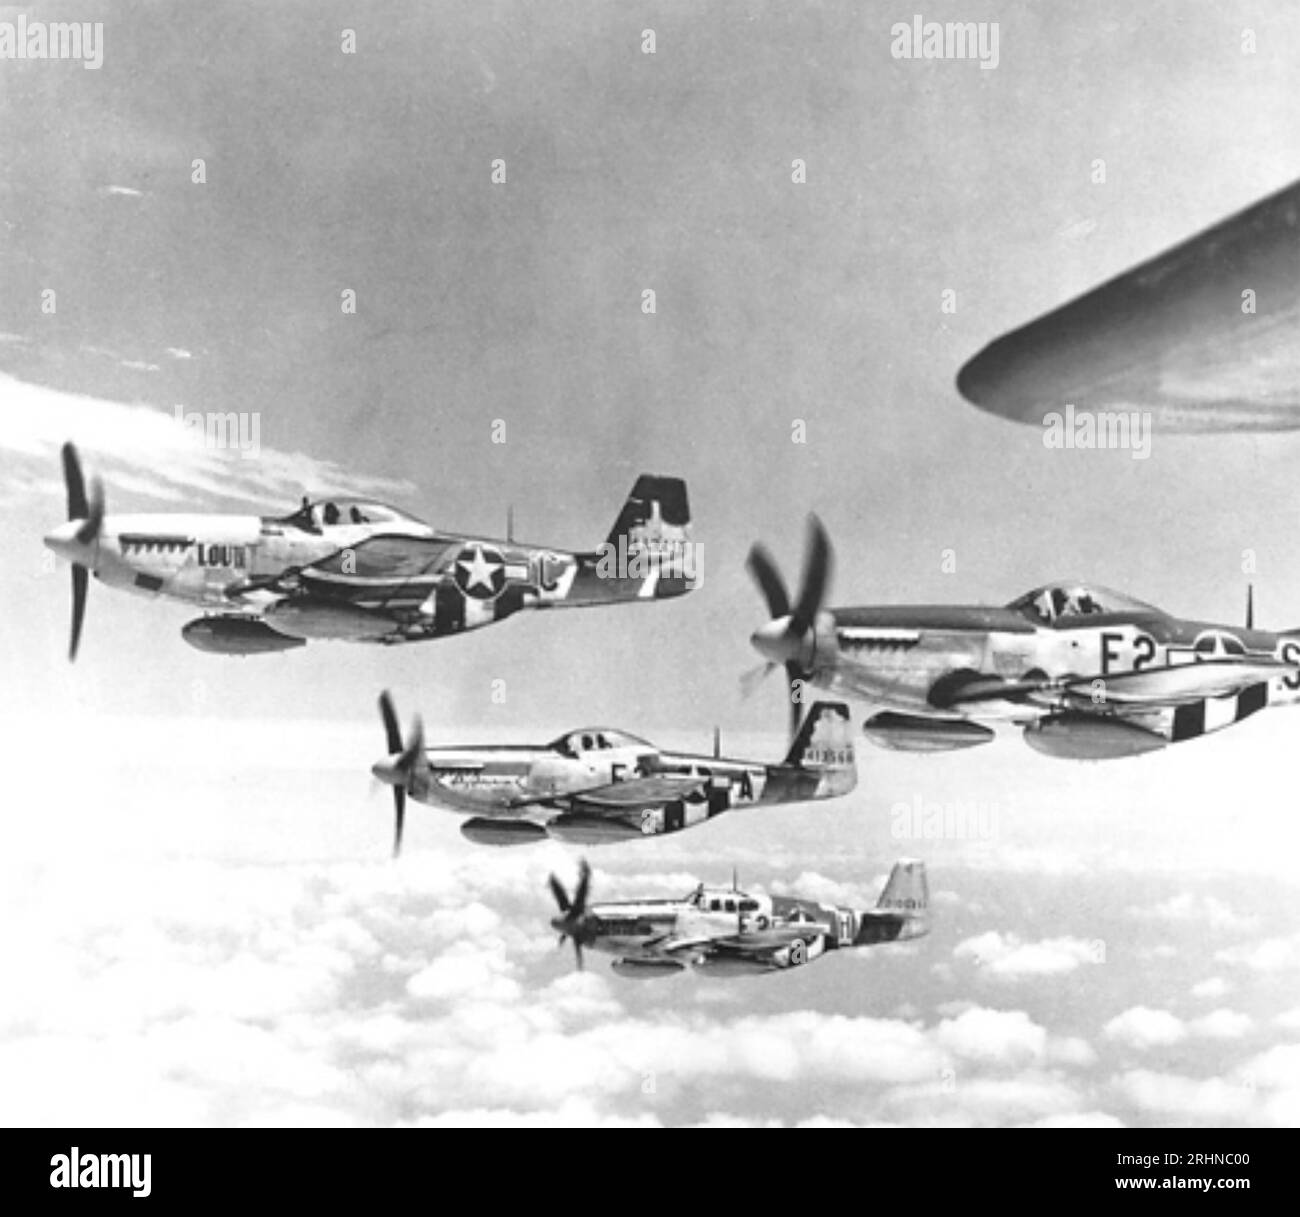 NORDAMERIKANISCHE P-51 MUSTANG Escort Fighters mit Drop Fuel Tanks im März 1944 Stockfoto